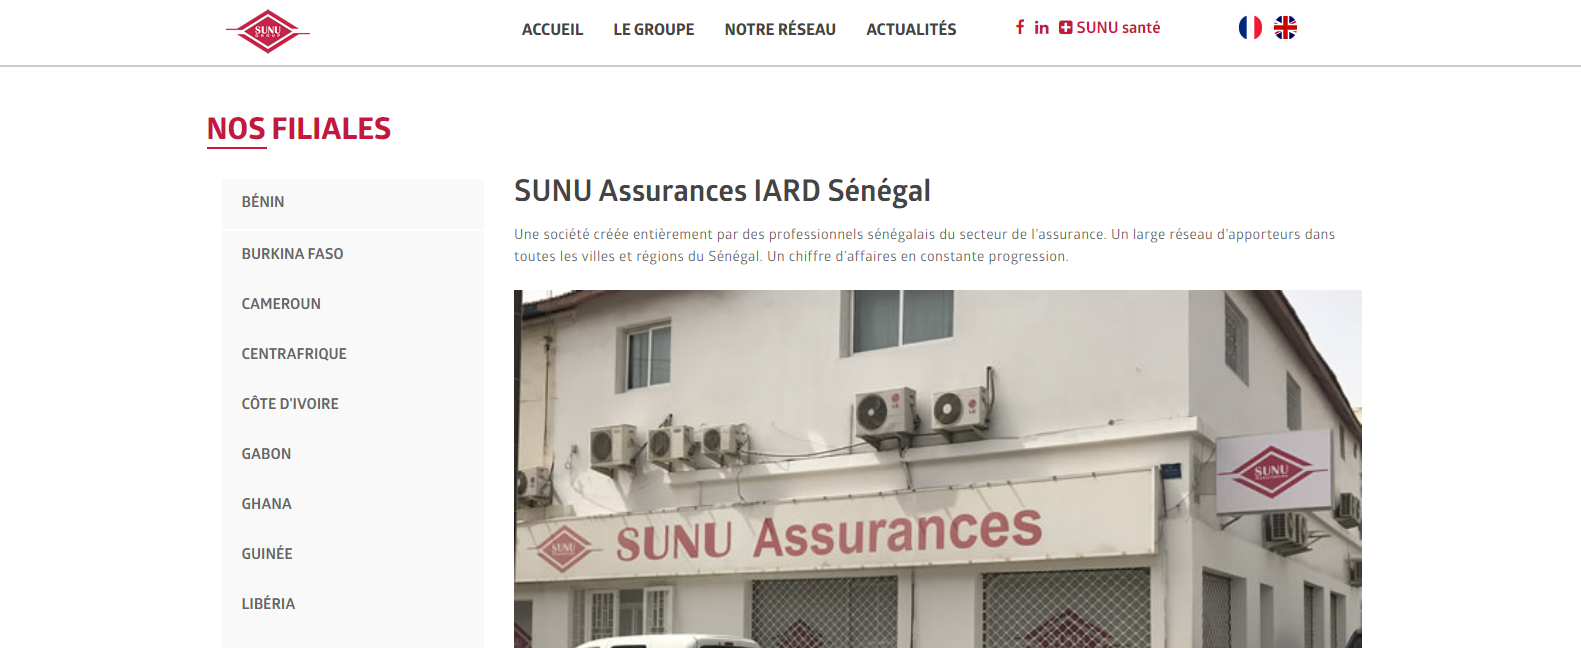 compagnies d'assurance au Sénégal Sunu assurance